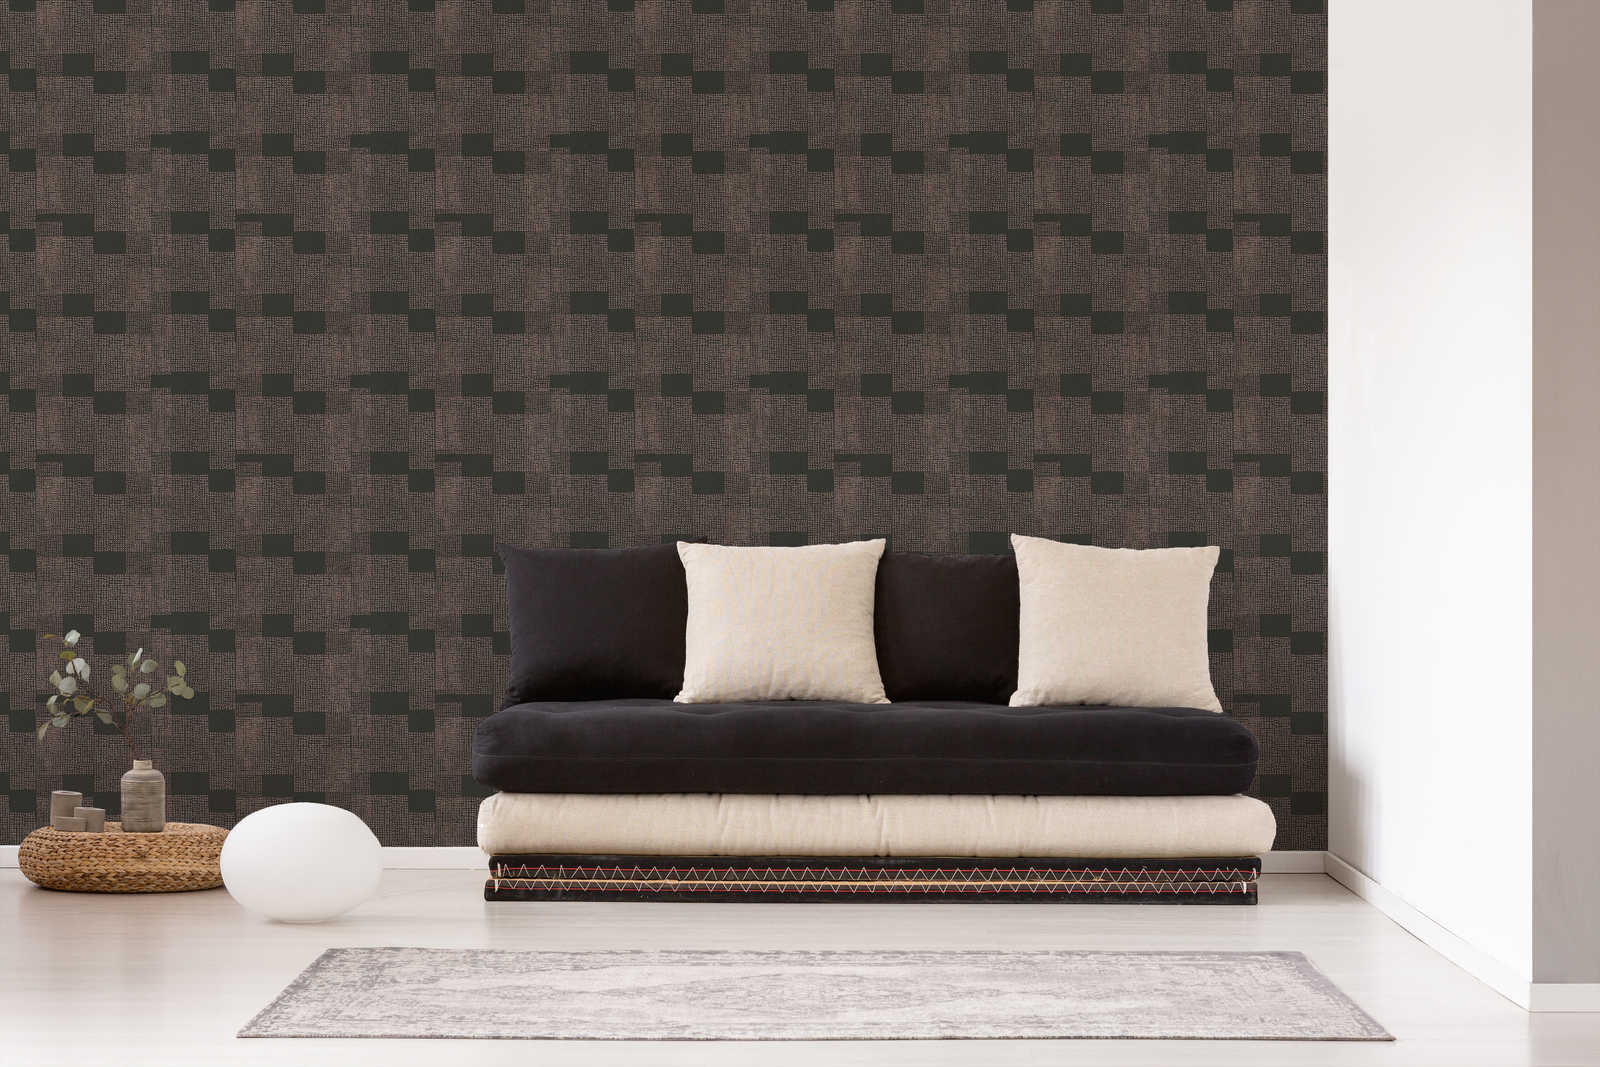             Geometric wallpaper ethnic design - black, metallic
        